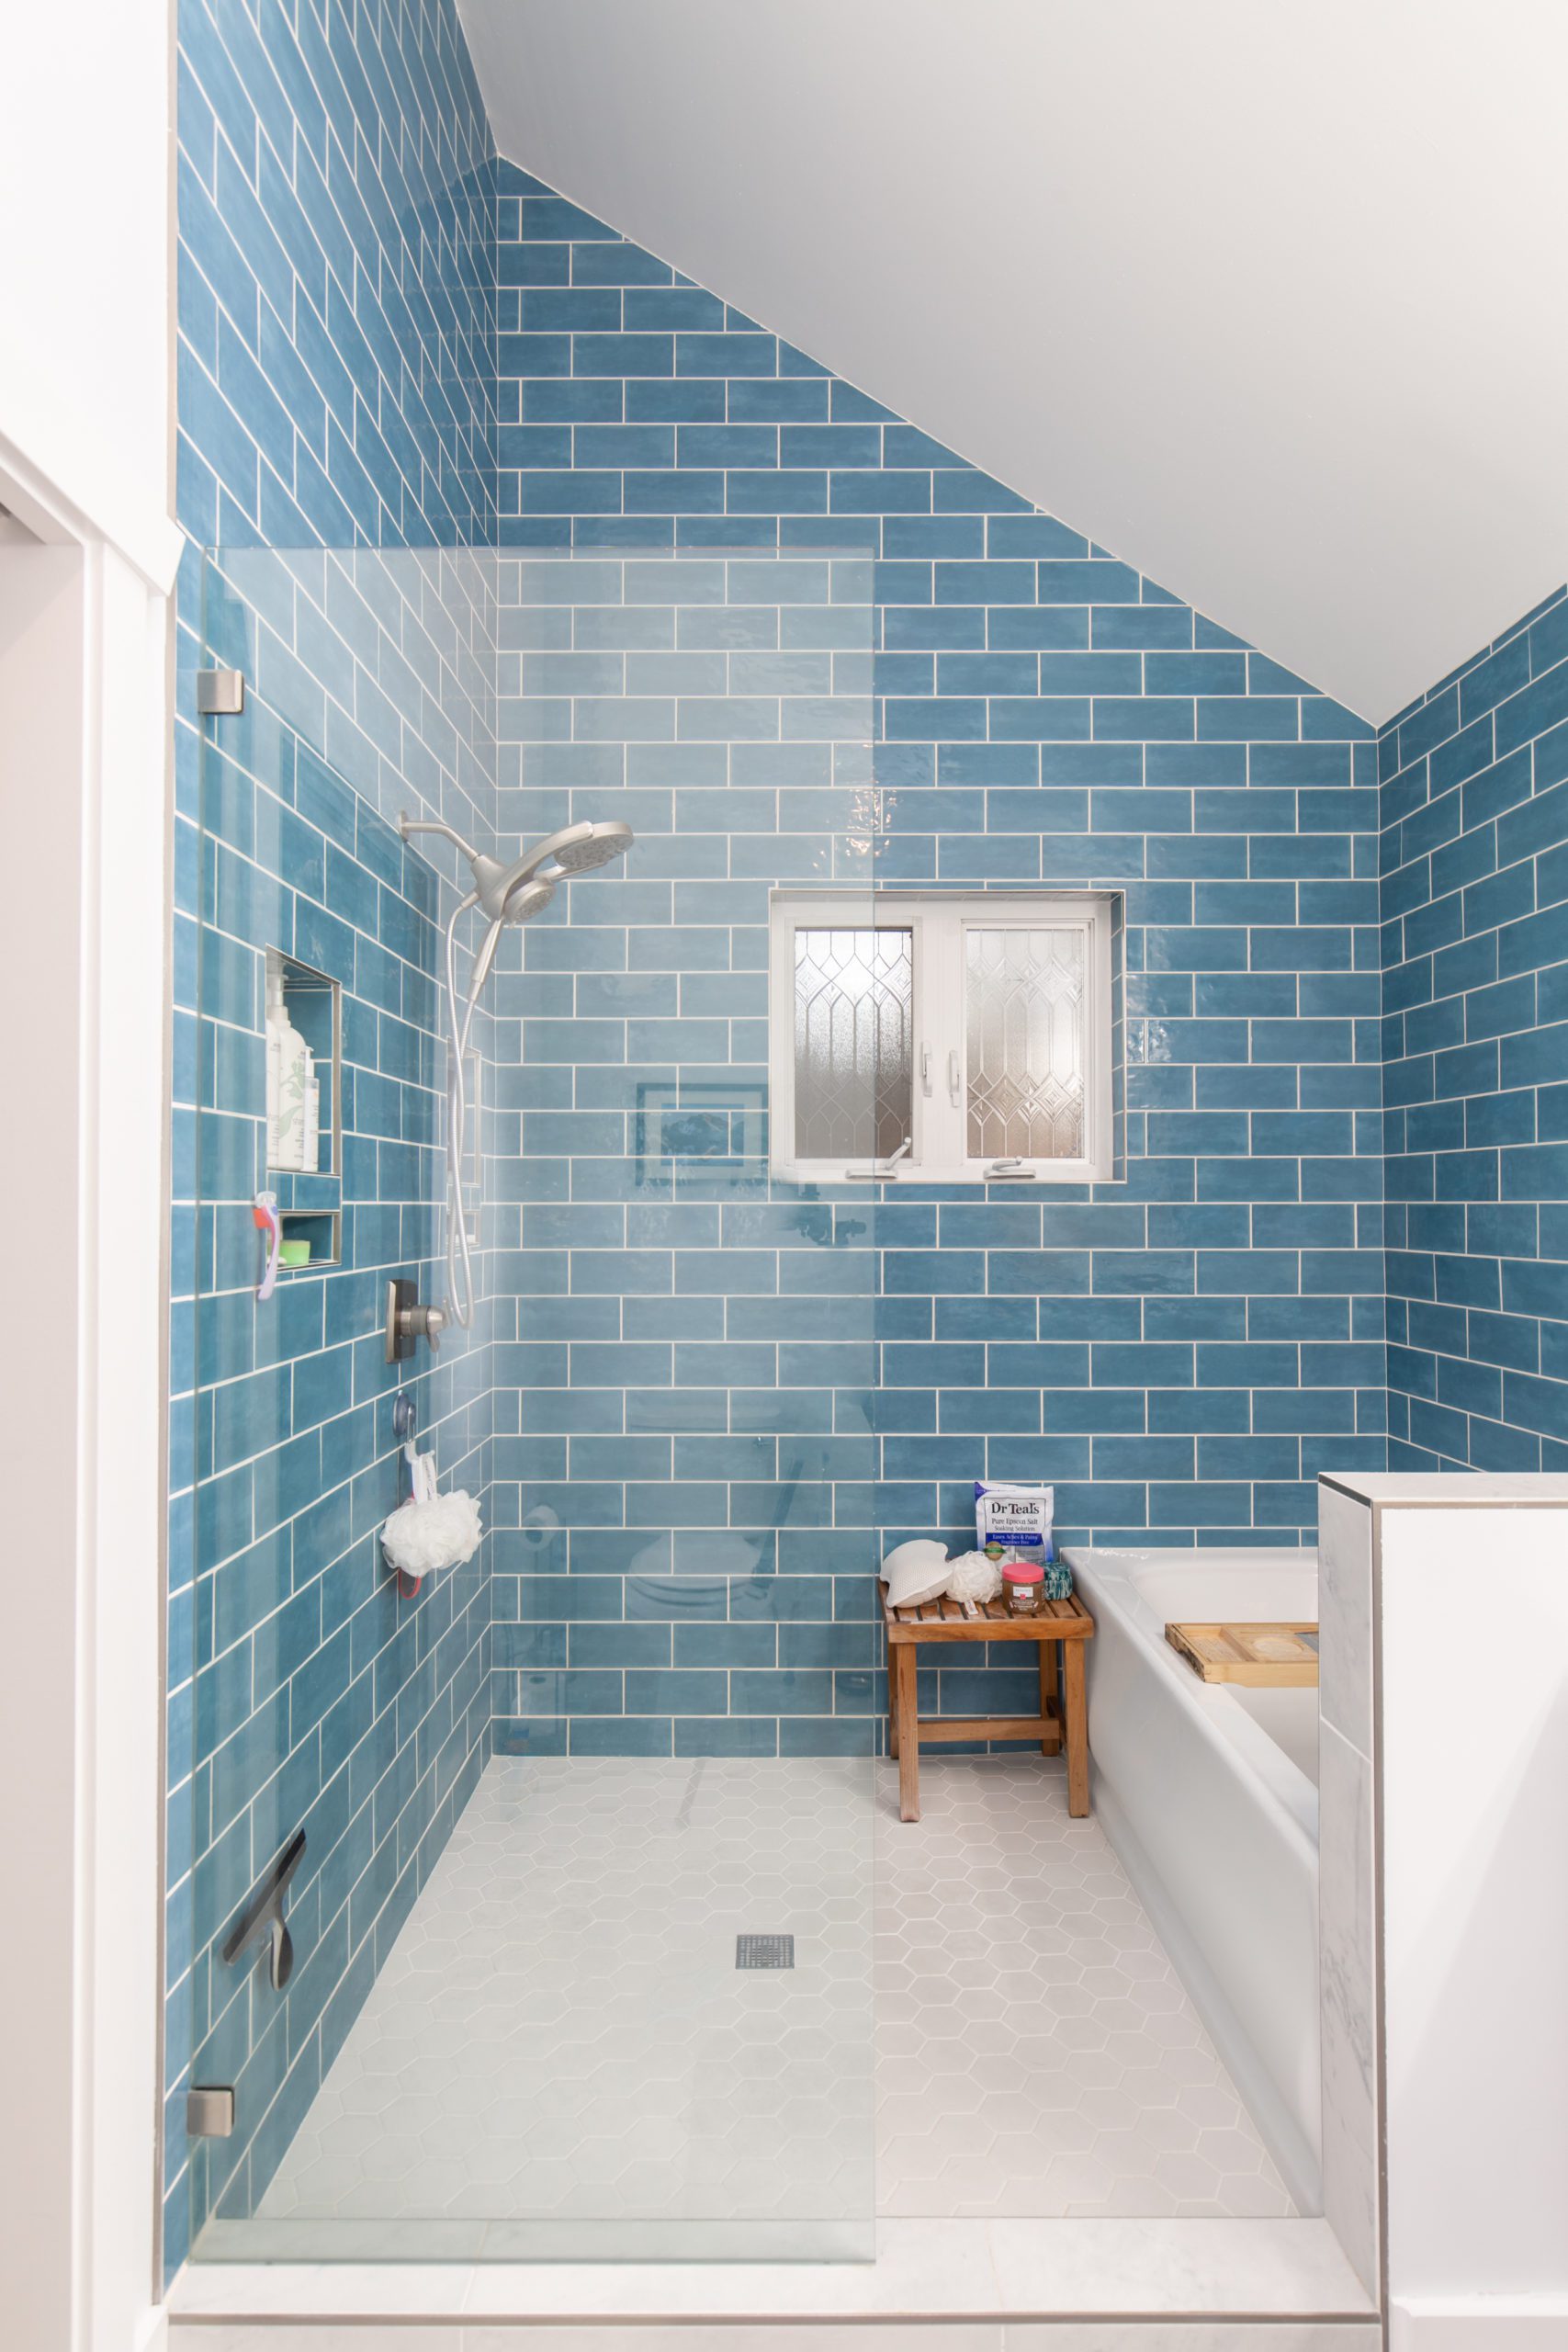 Renovated large open concept shower with teal tile backsplash walls, white tile flooring, renovated appliances